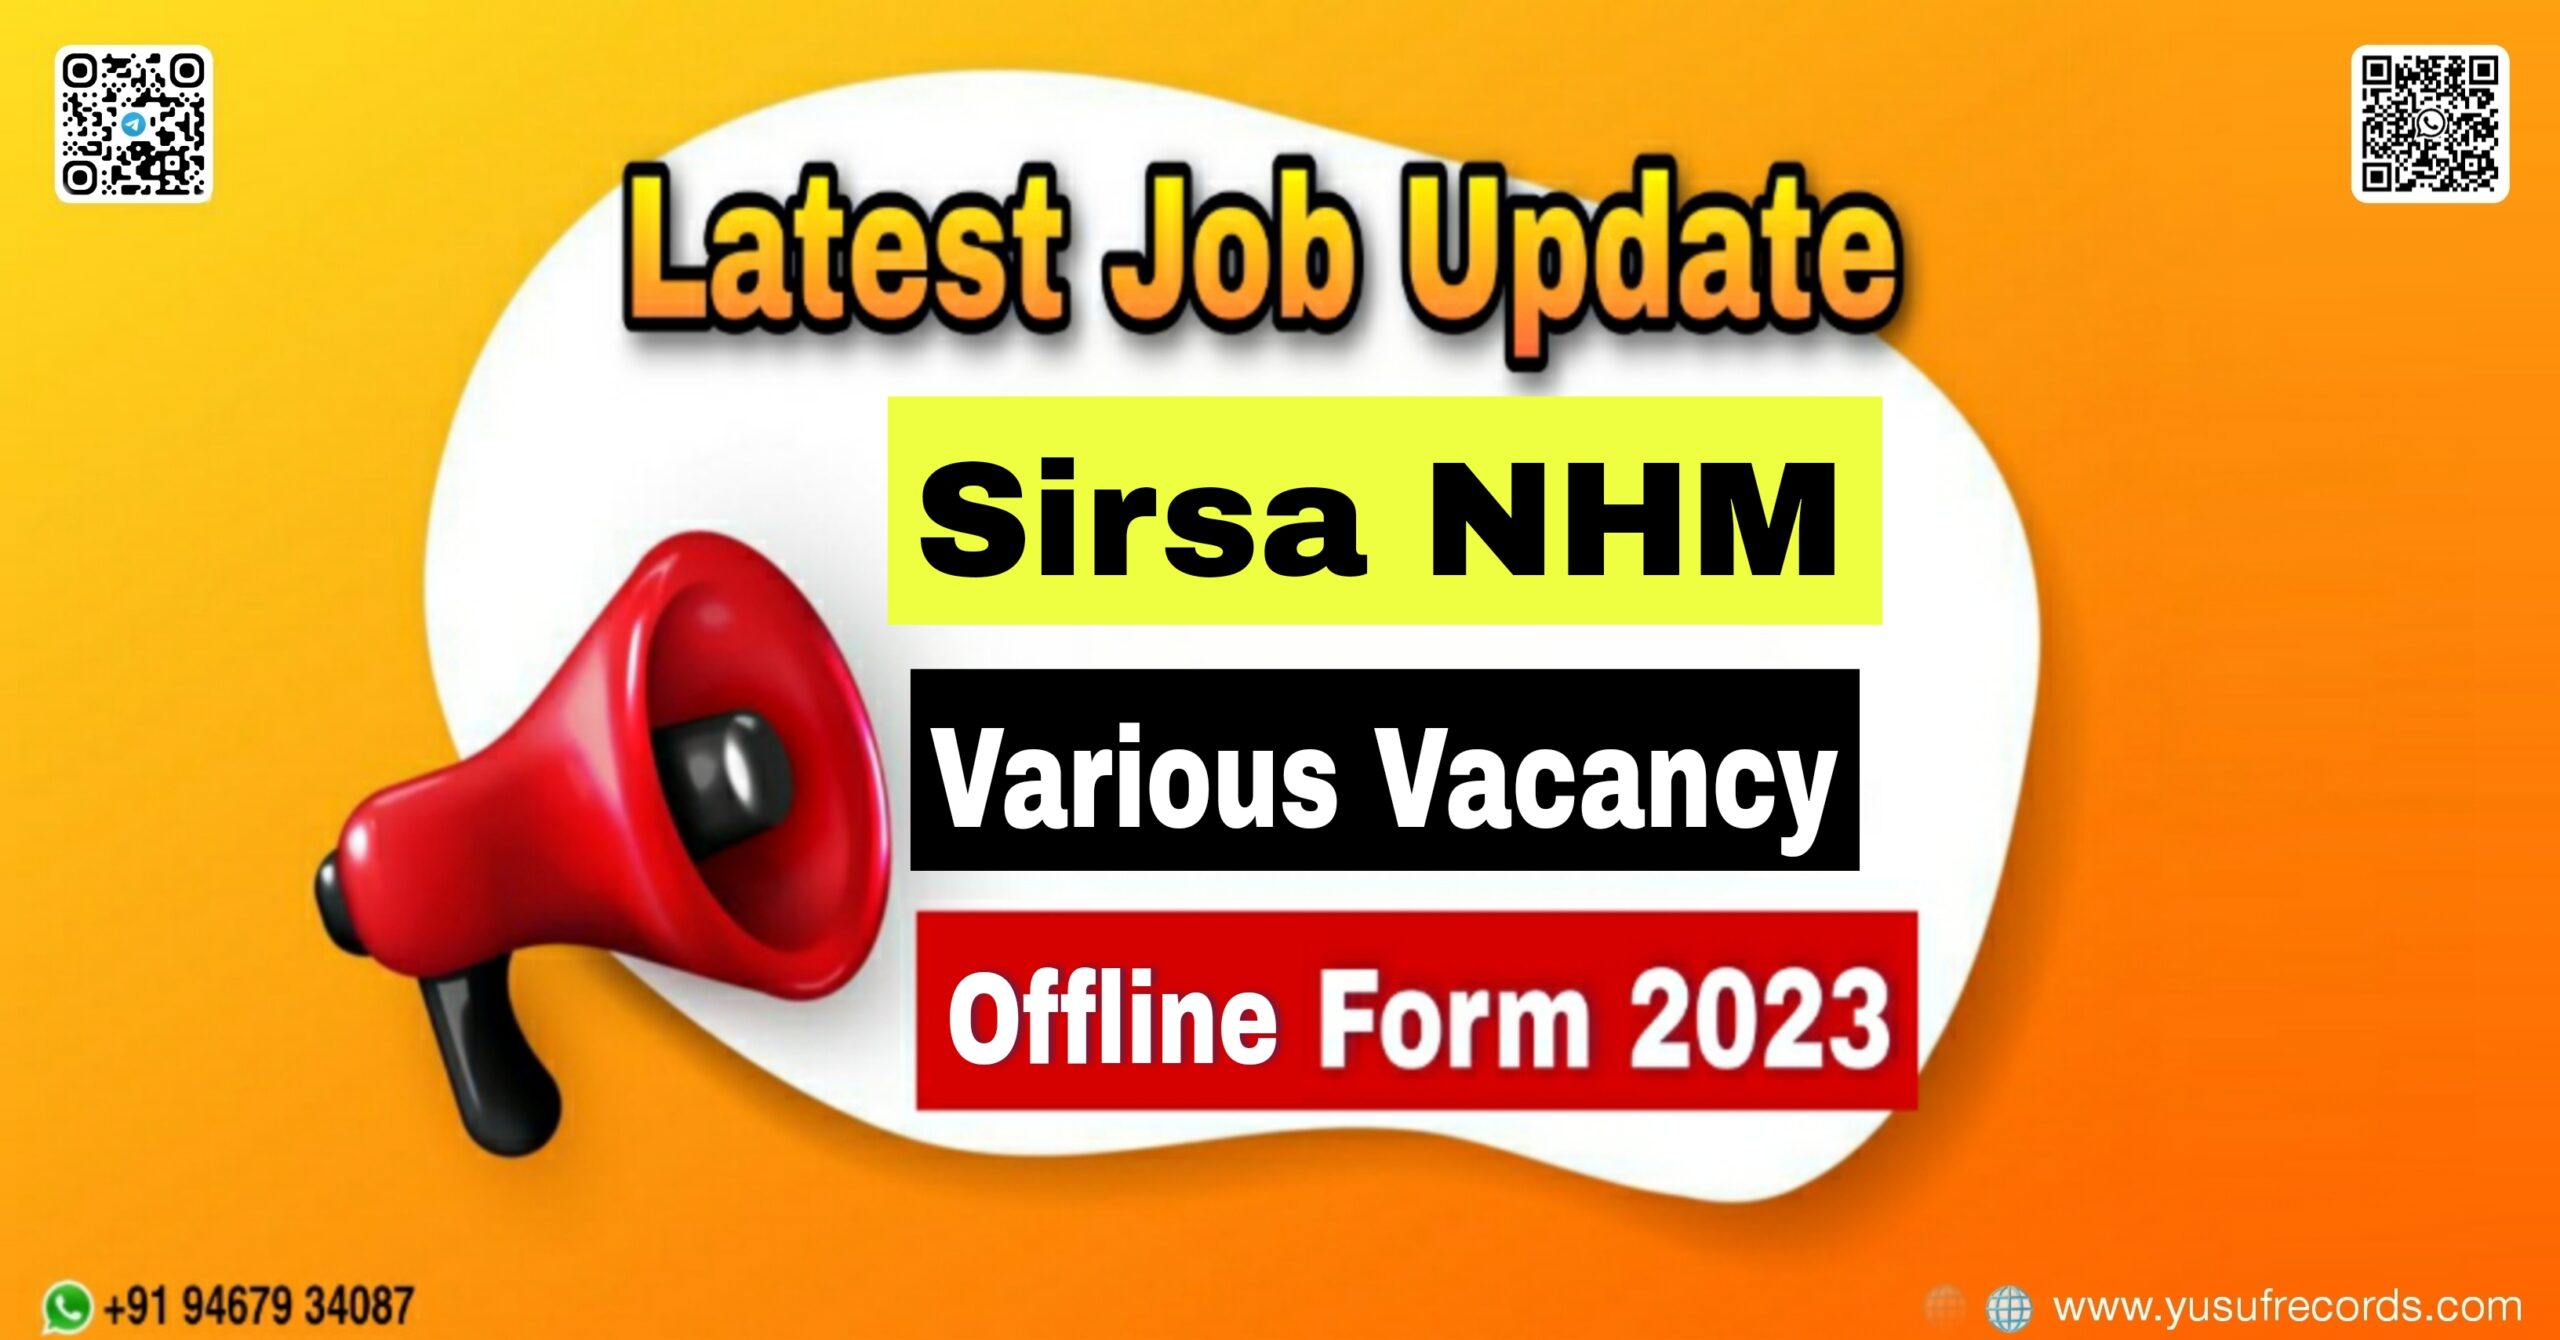 Sirsa NHM Various Vacancy Offline Form